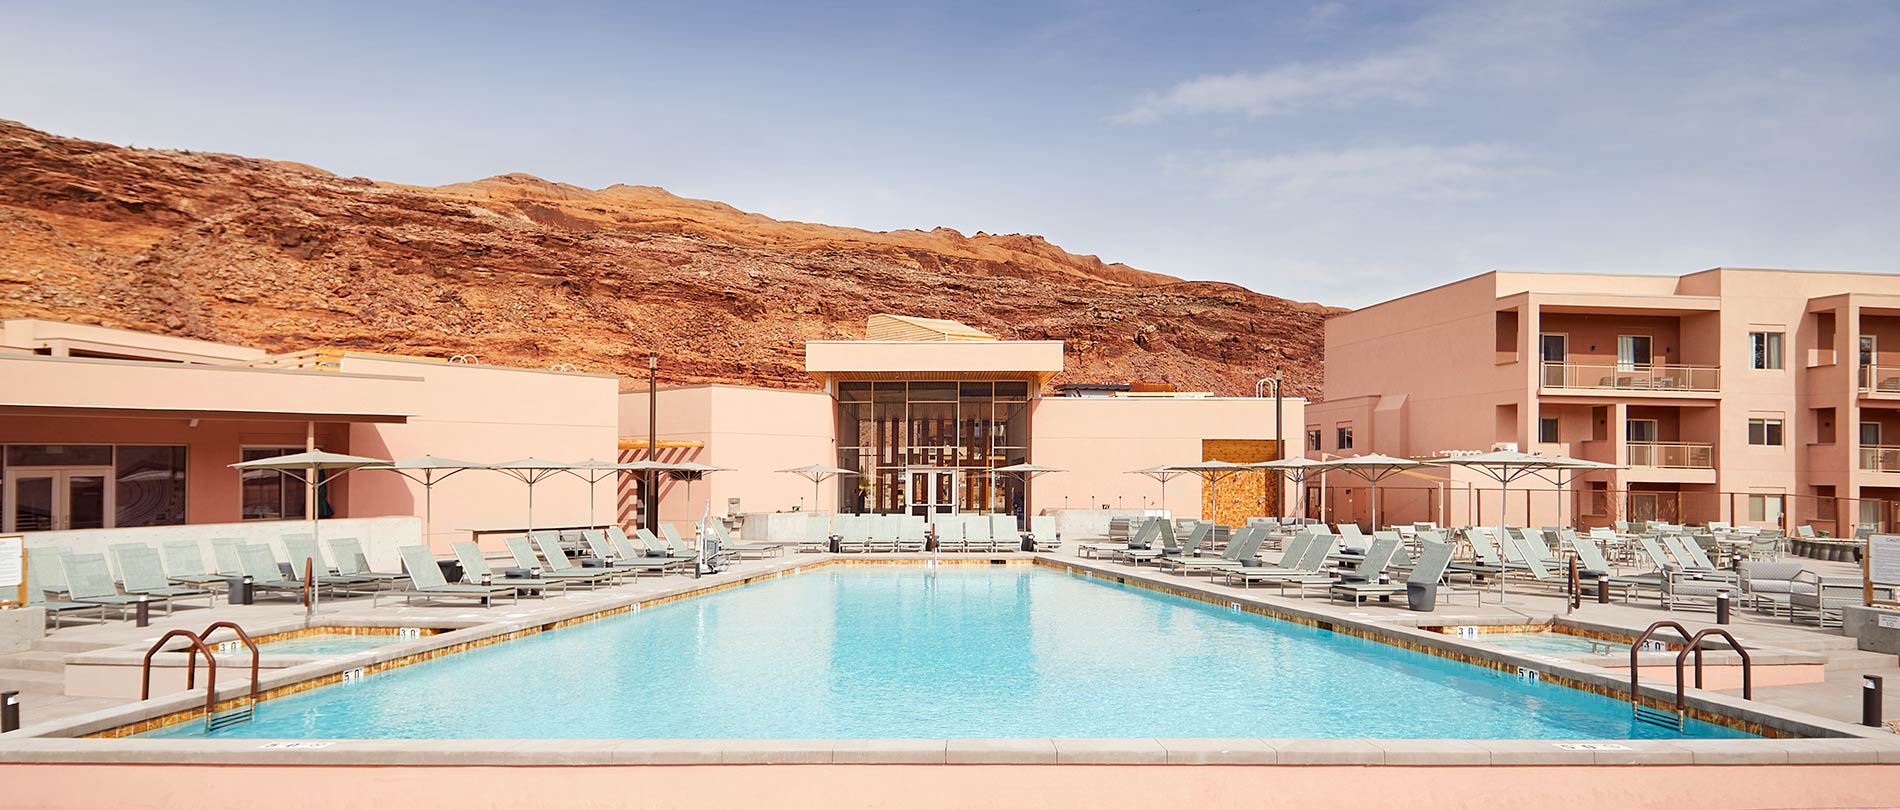 The resort pool at Worldmark by Wyndham Moab, in Moab, Utah.